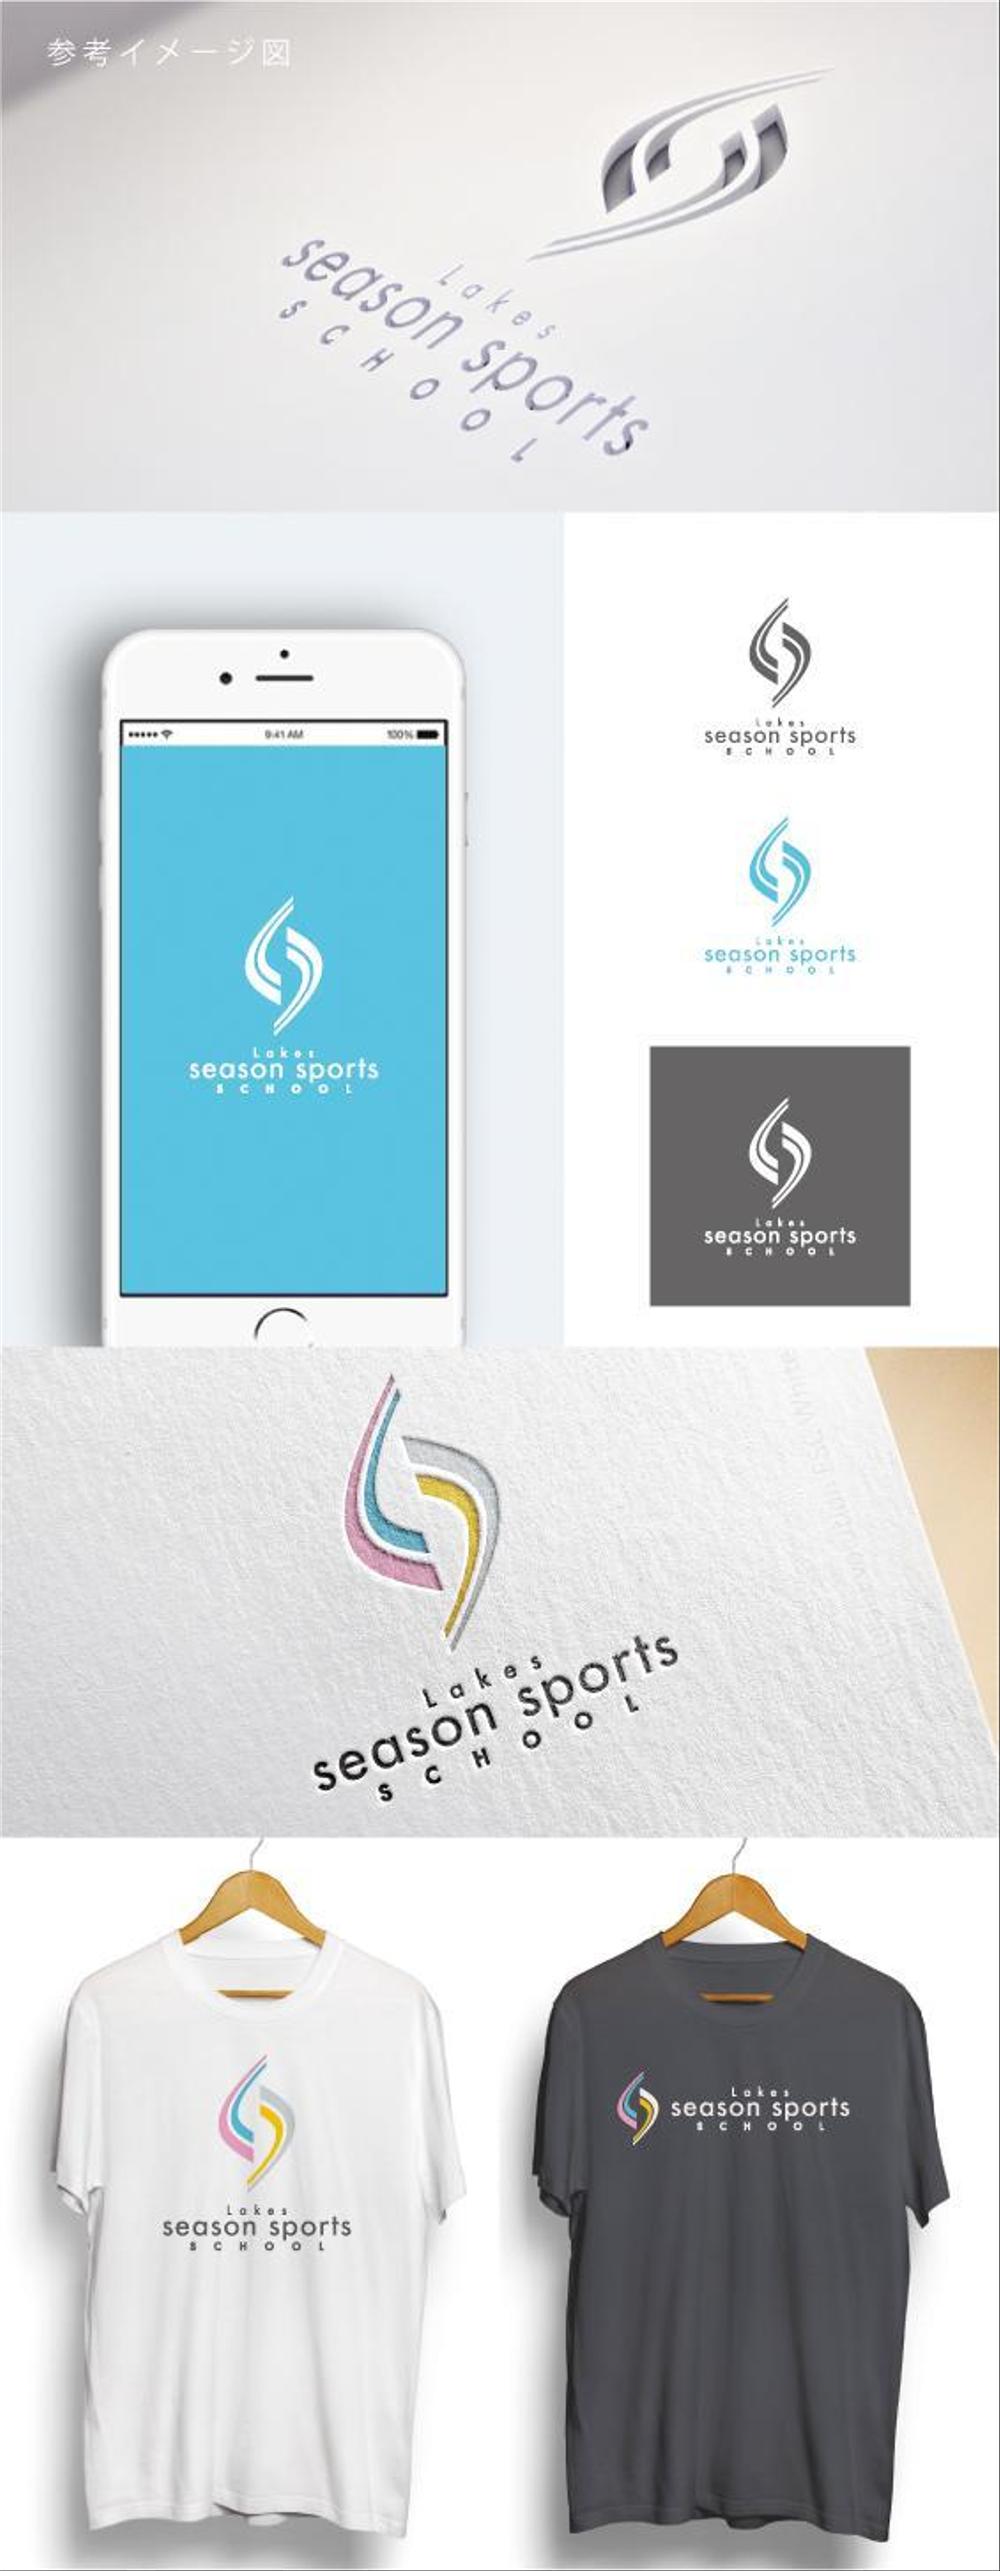 B.LEAGUE滋賀レイクスターズが新規開設する「シーズンスポーツスクール（Season　Sports　School)」のロゴ